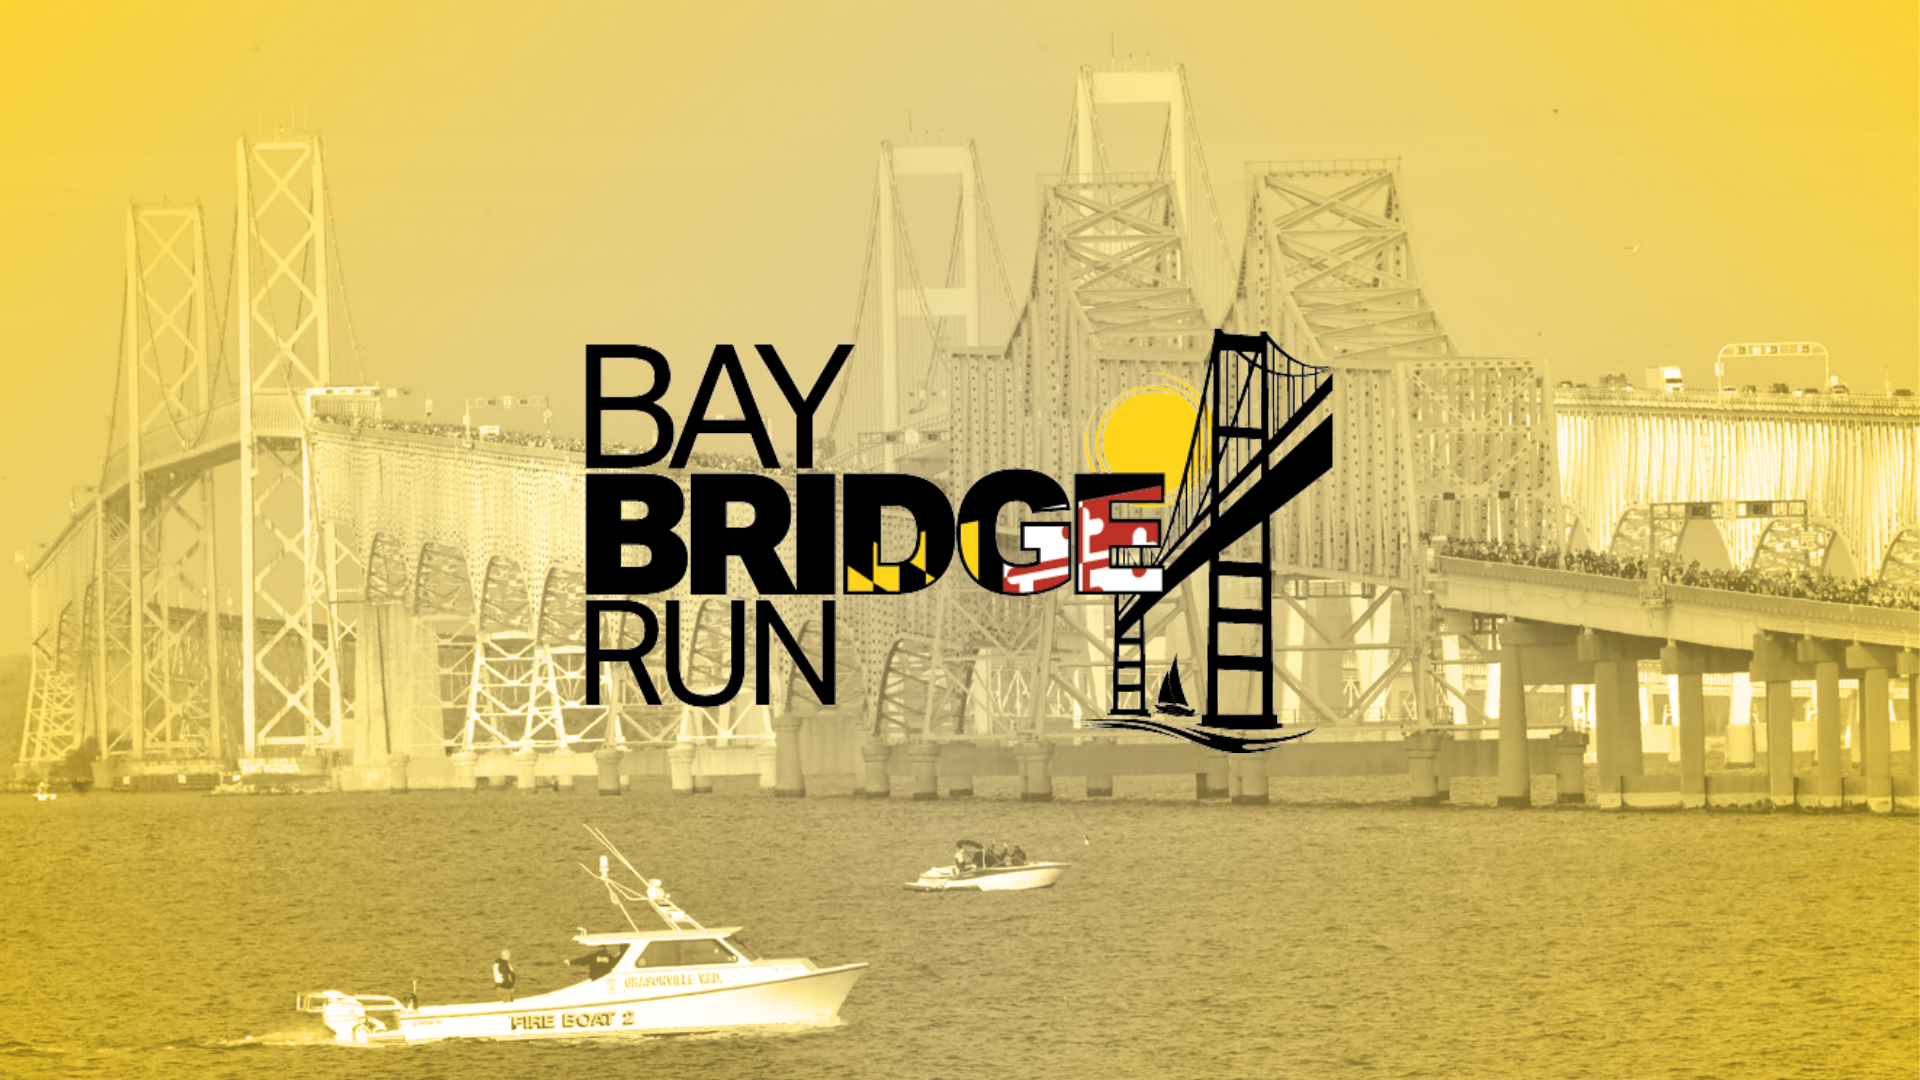 The Bay Bridge Run